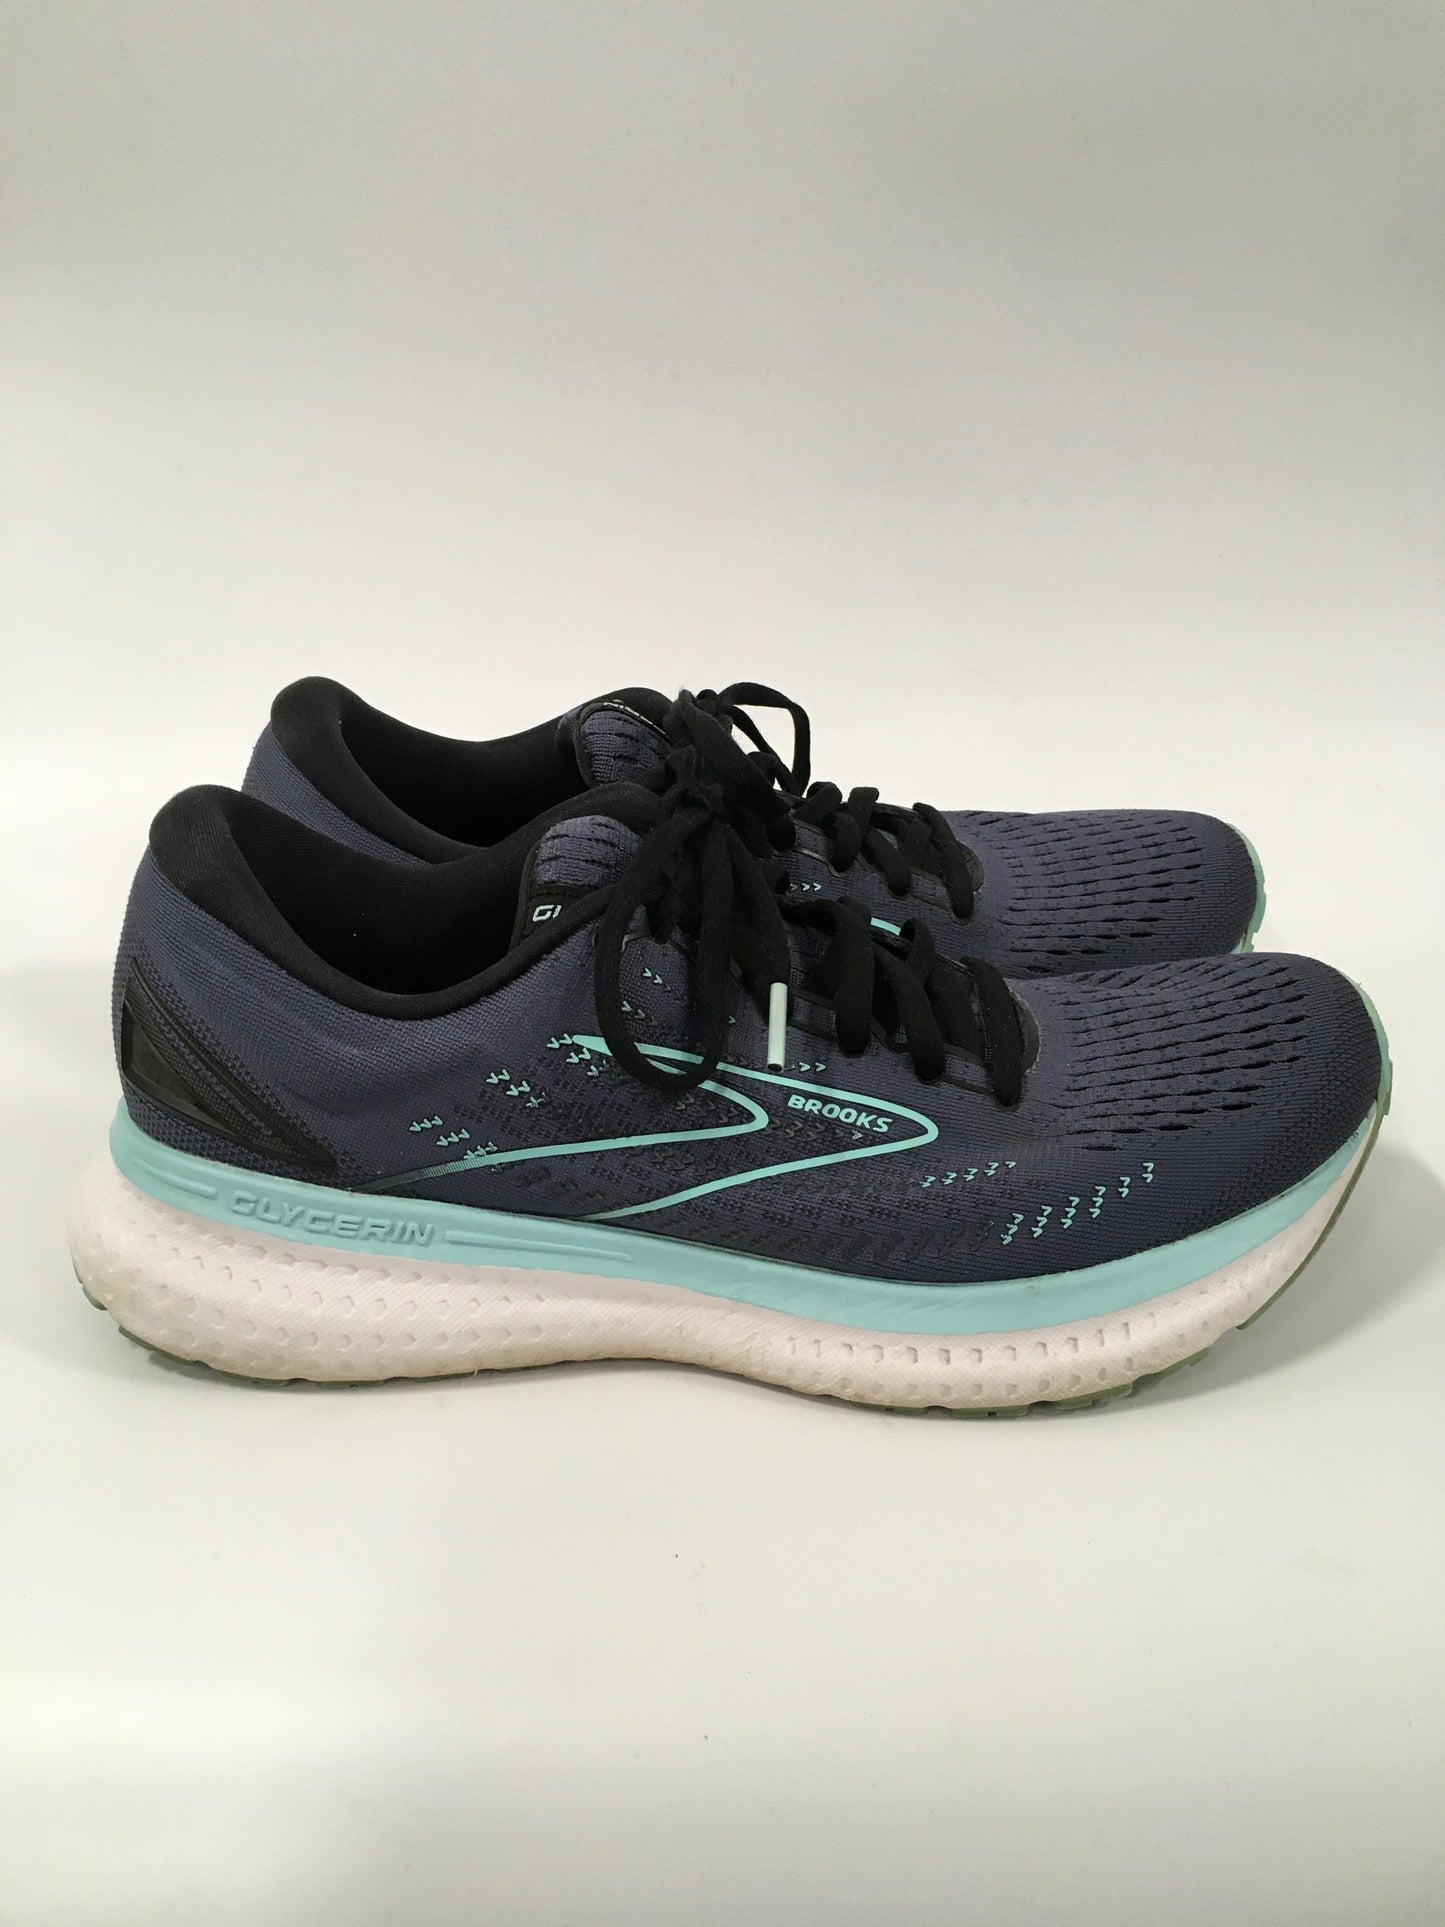 Blue Shoes Athletic Brooks, Size 8.5